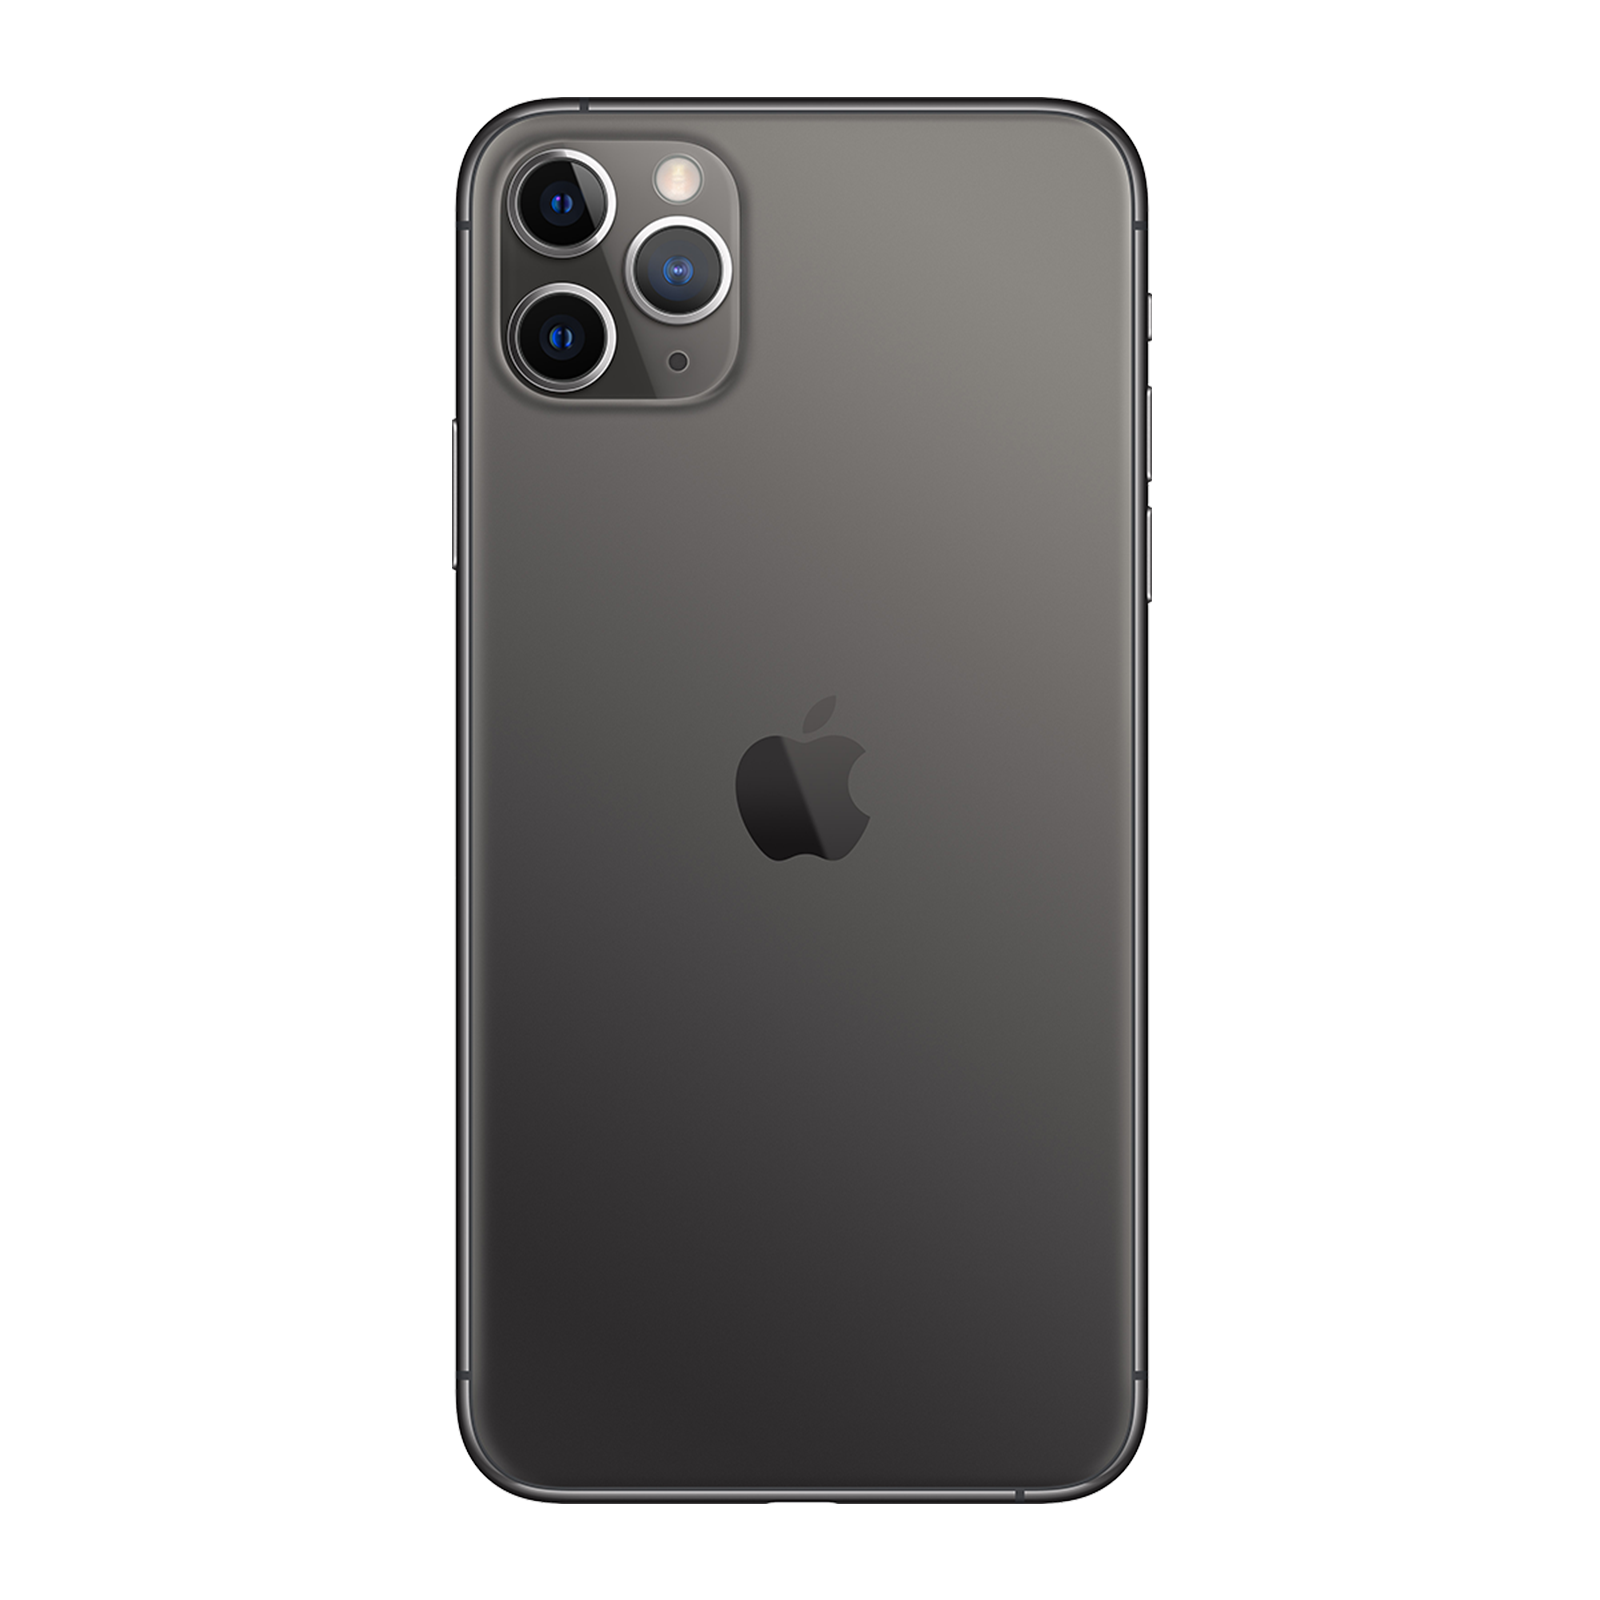 Apple iPhone 11 Pro Max 512GB Space Grey Pristine - Verizon